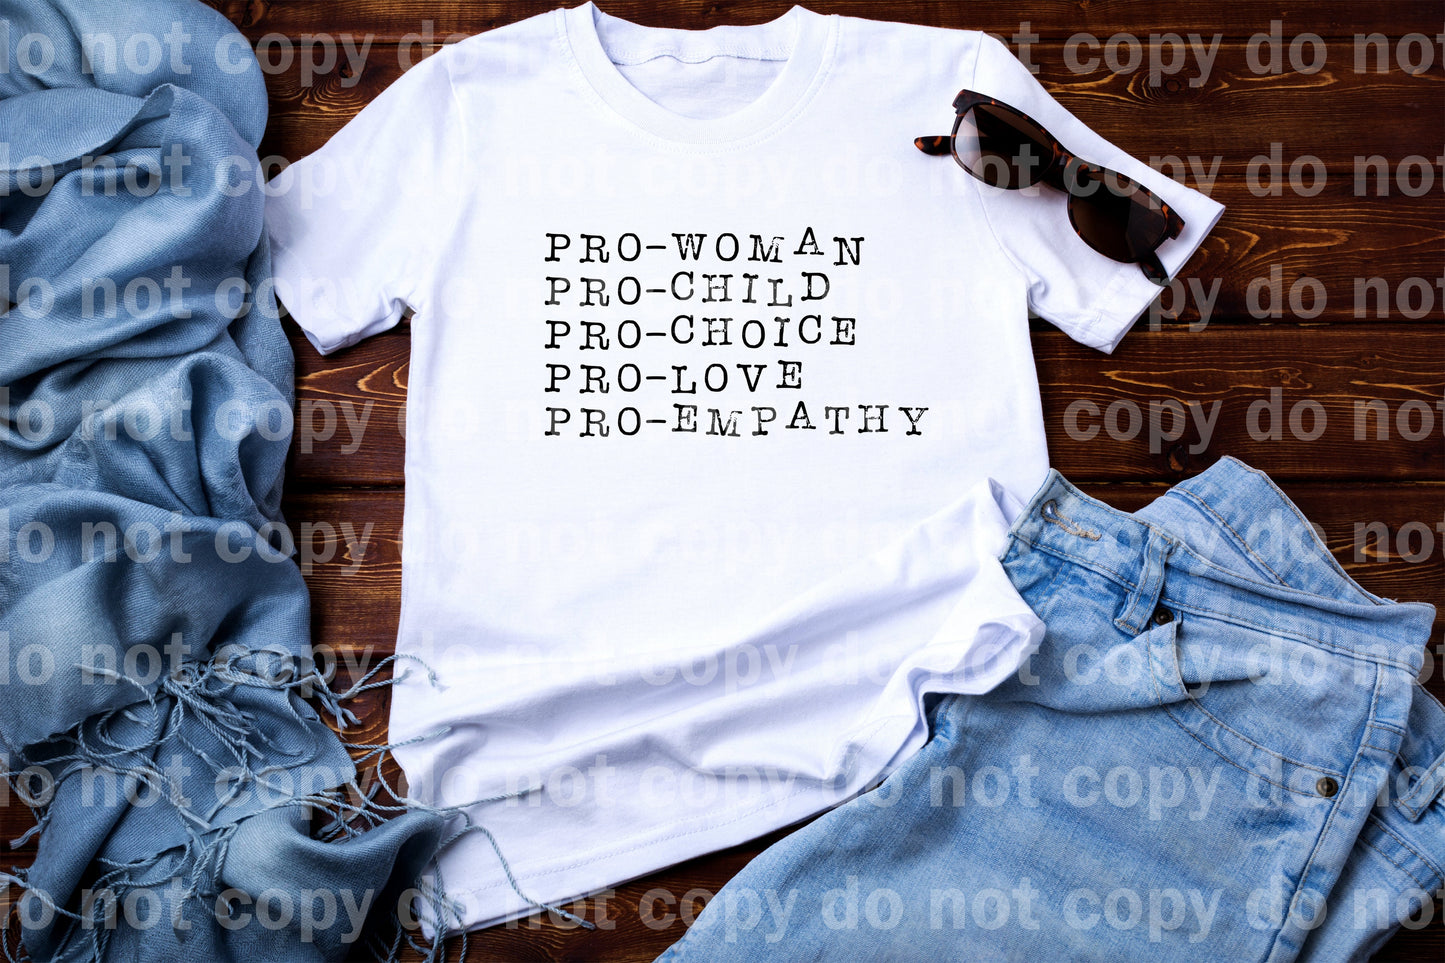 Pro Woman Pro Child Pro Choice Pro Love Pro Empathy Dream Print or Sublimation Print